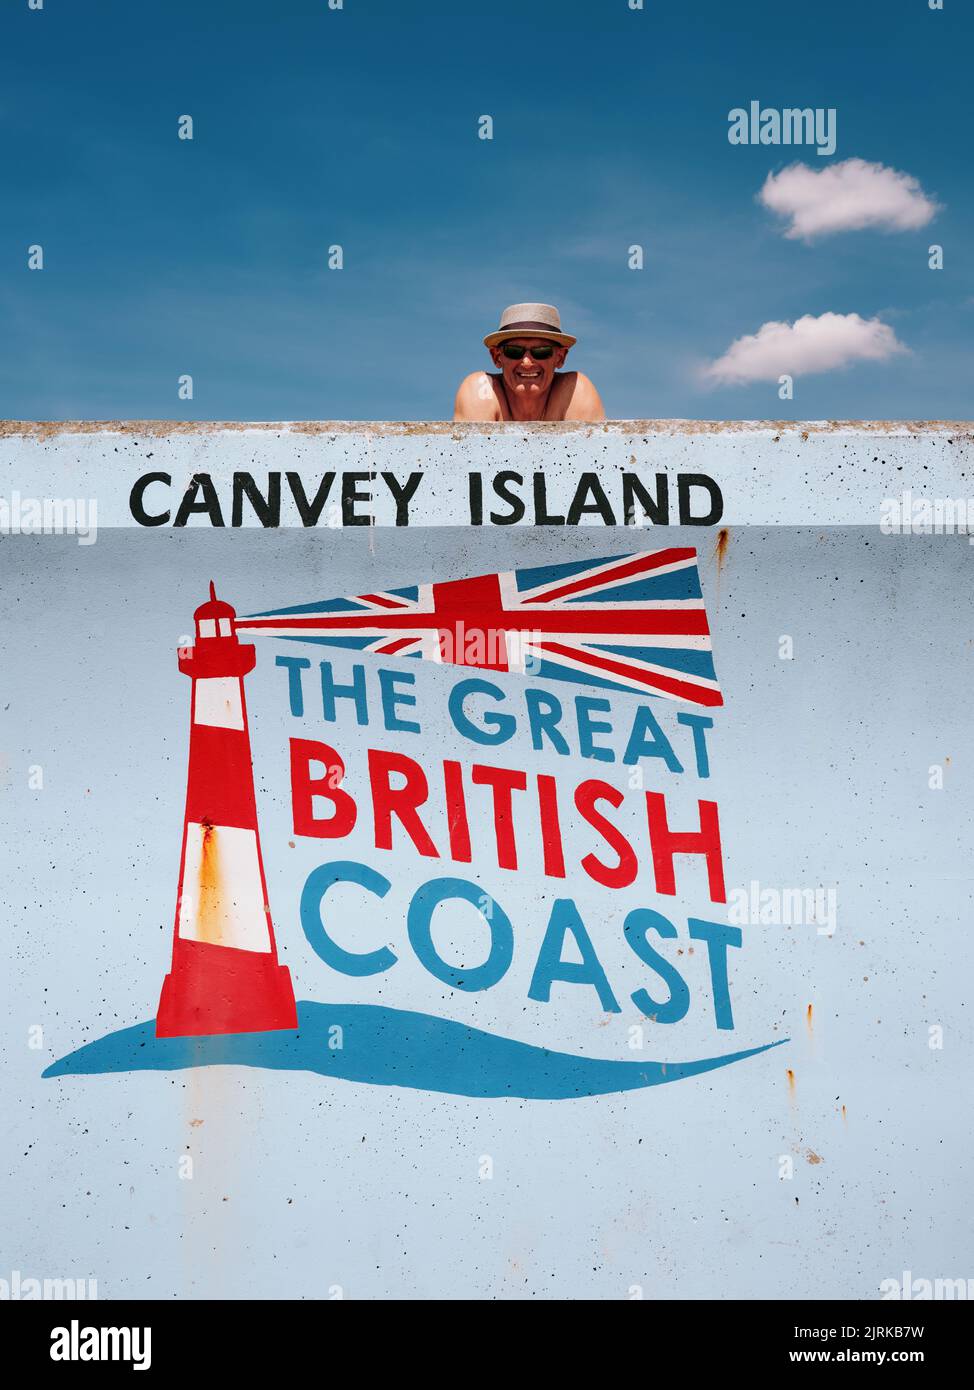 Staycation été touriste homme - la Great British Coast Seawall phare art Canvey Island, Thames Estuary, Essex, Angleterre, Royaume-Uni - Essex Life man Banque D'Images